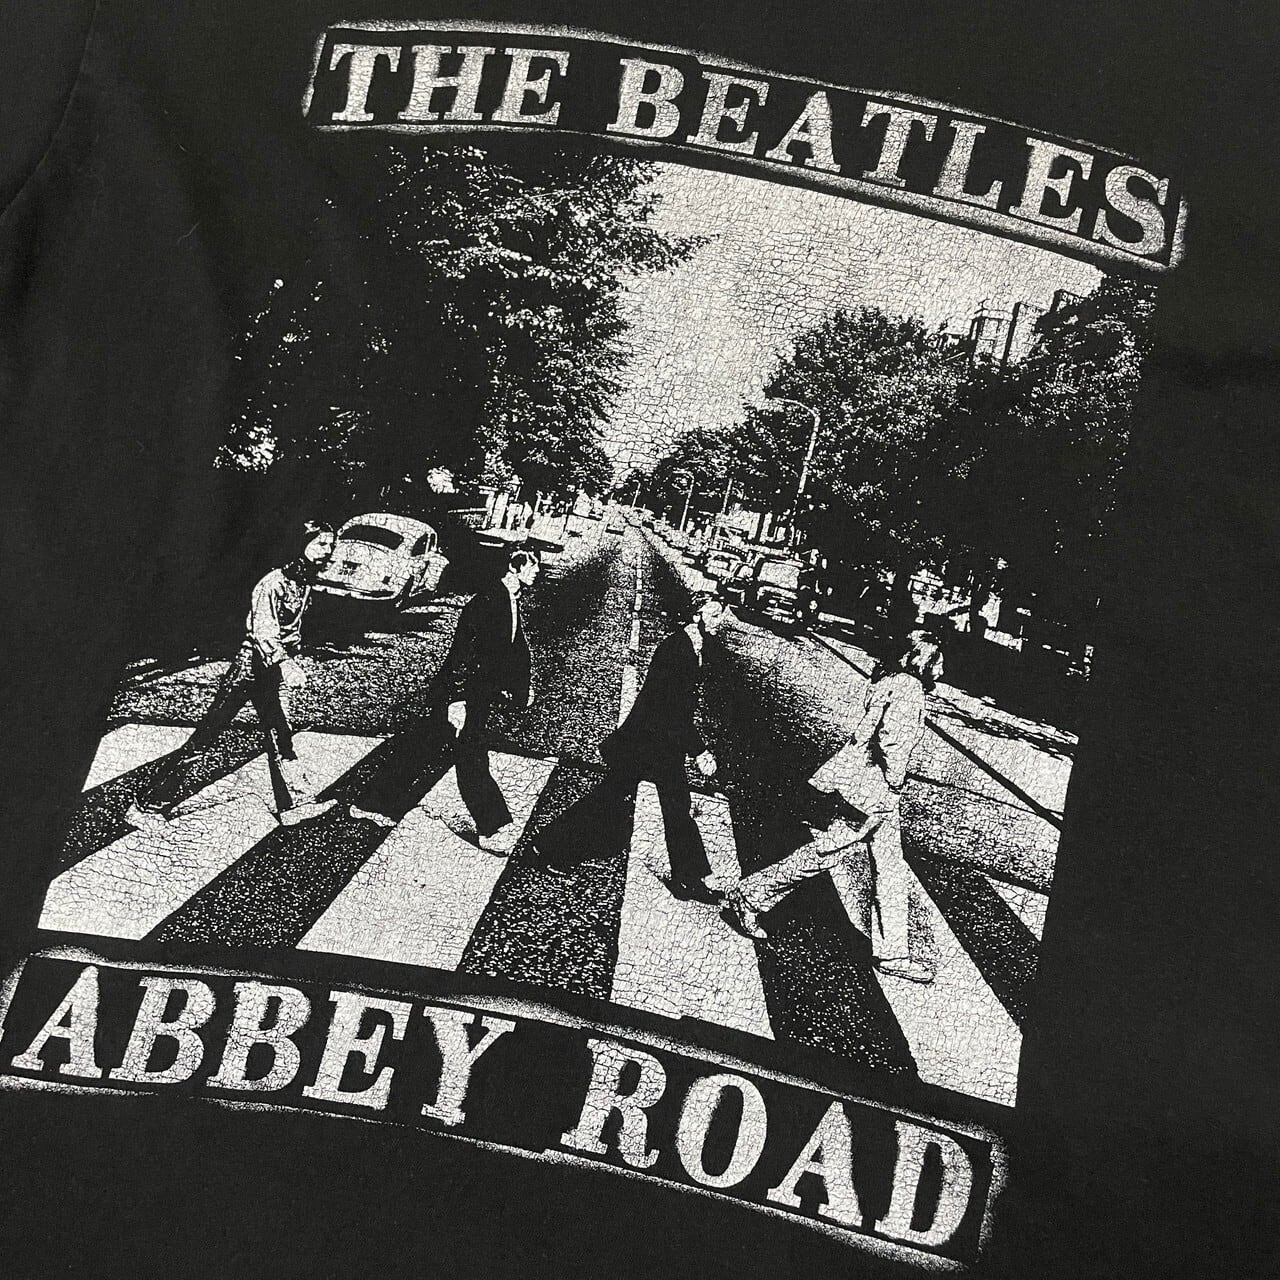 THE BEATLES ビートルズ Abbey Road Tシャツ バンT